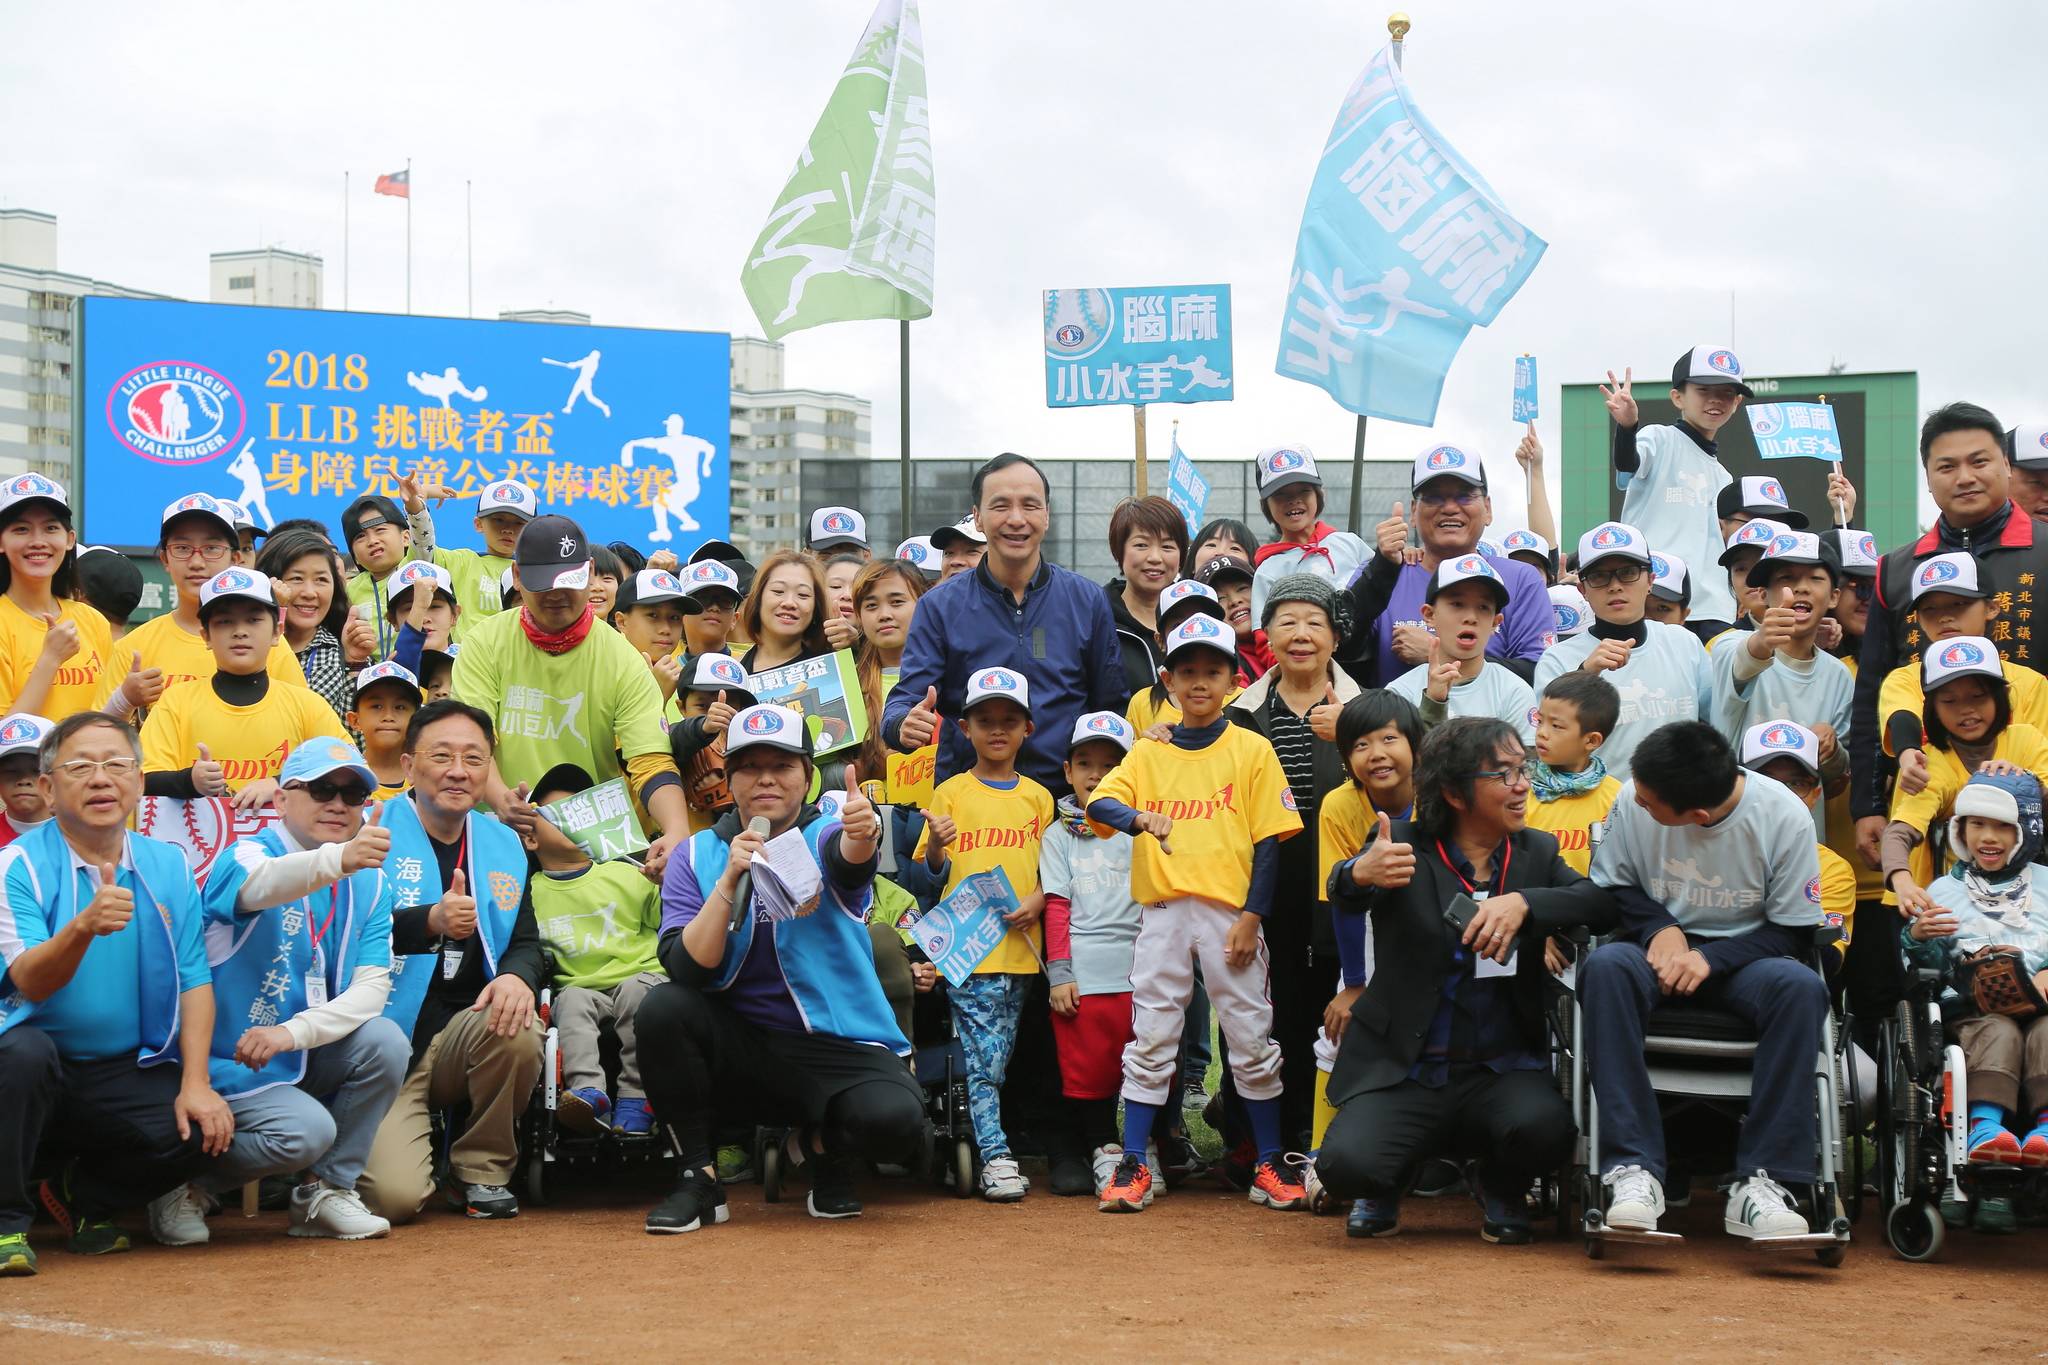 2018LLB挑戰者盃身障兒童公益棒球賽